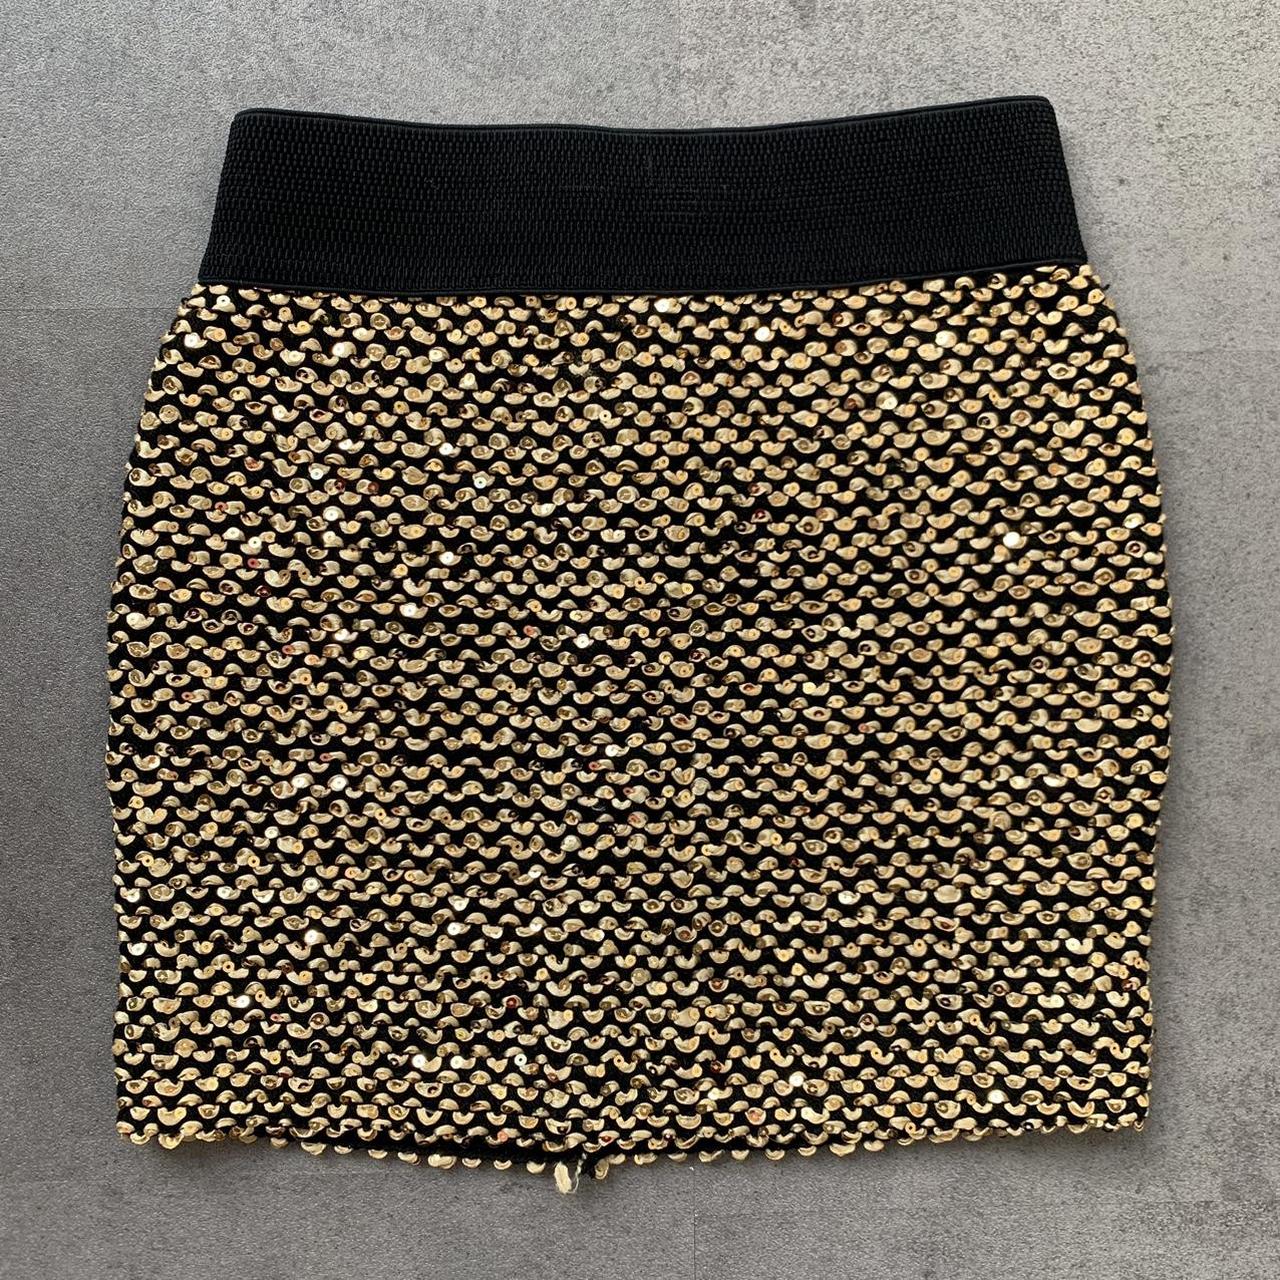 Gold sequin mini skirt 💋 Low rise Super... - Depop